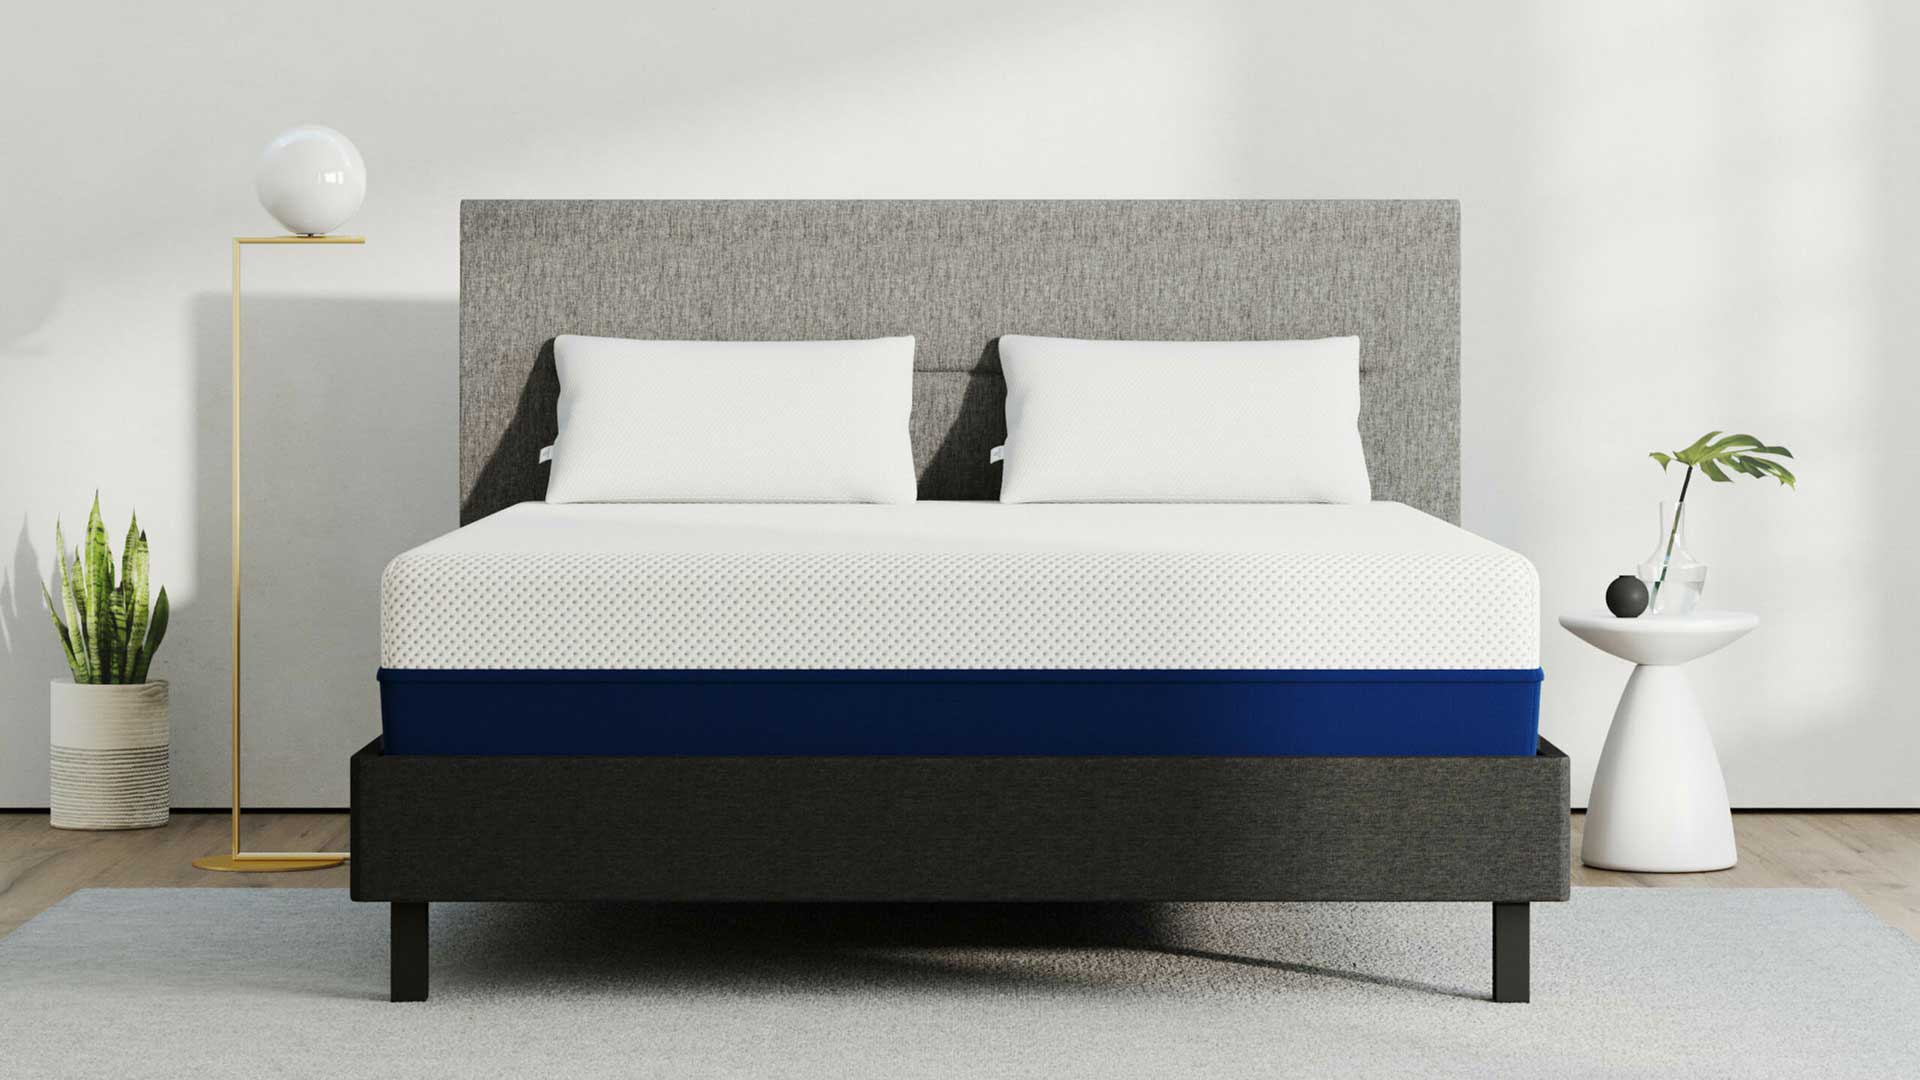 everett WA amerisleep mattress